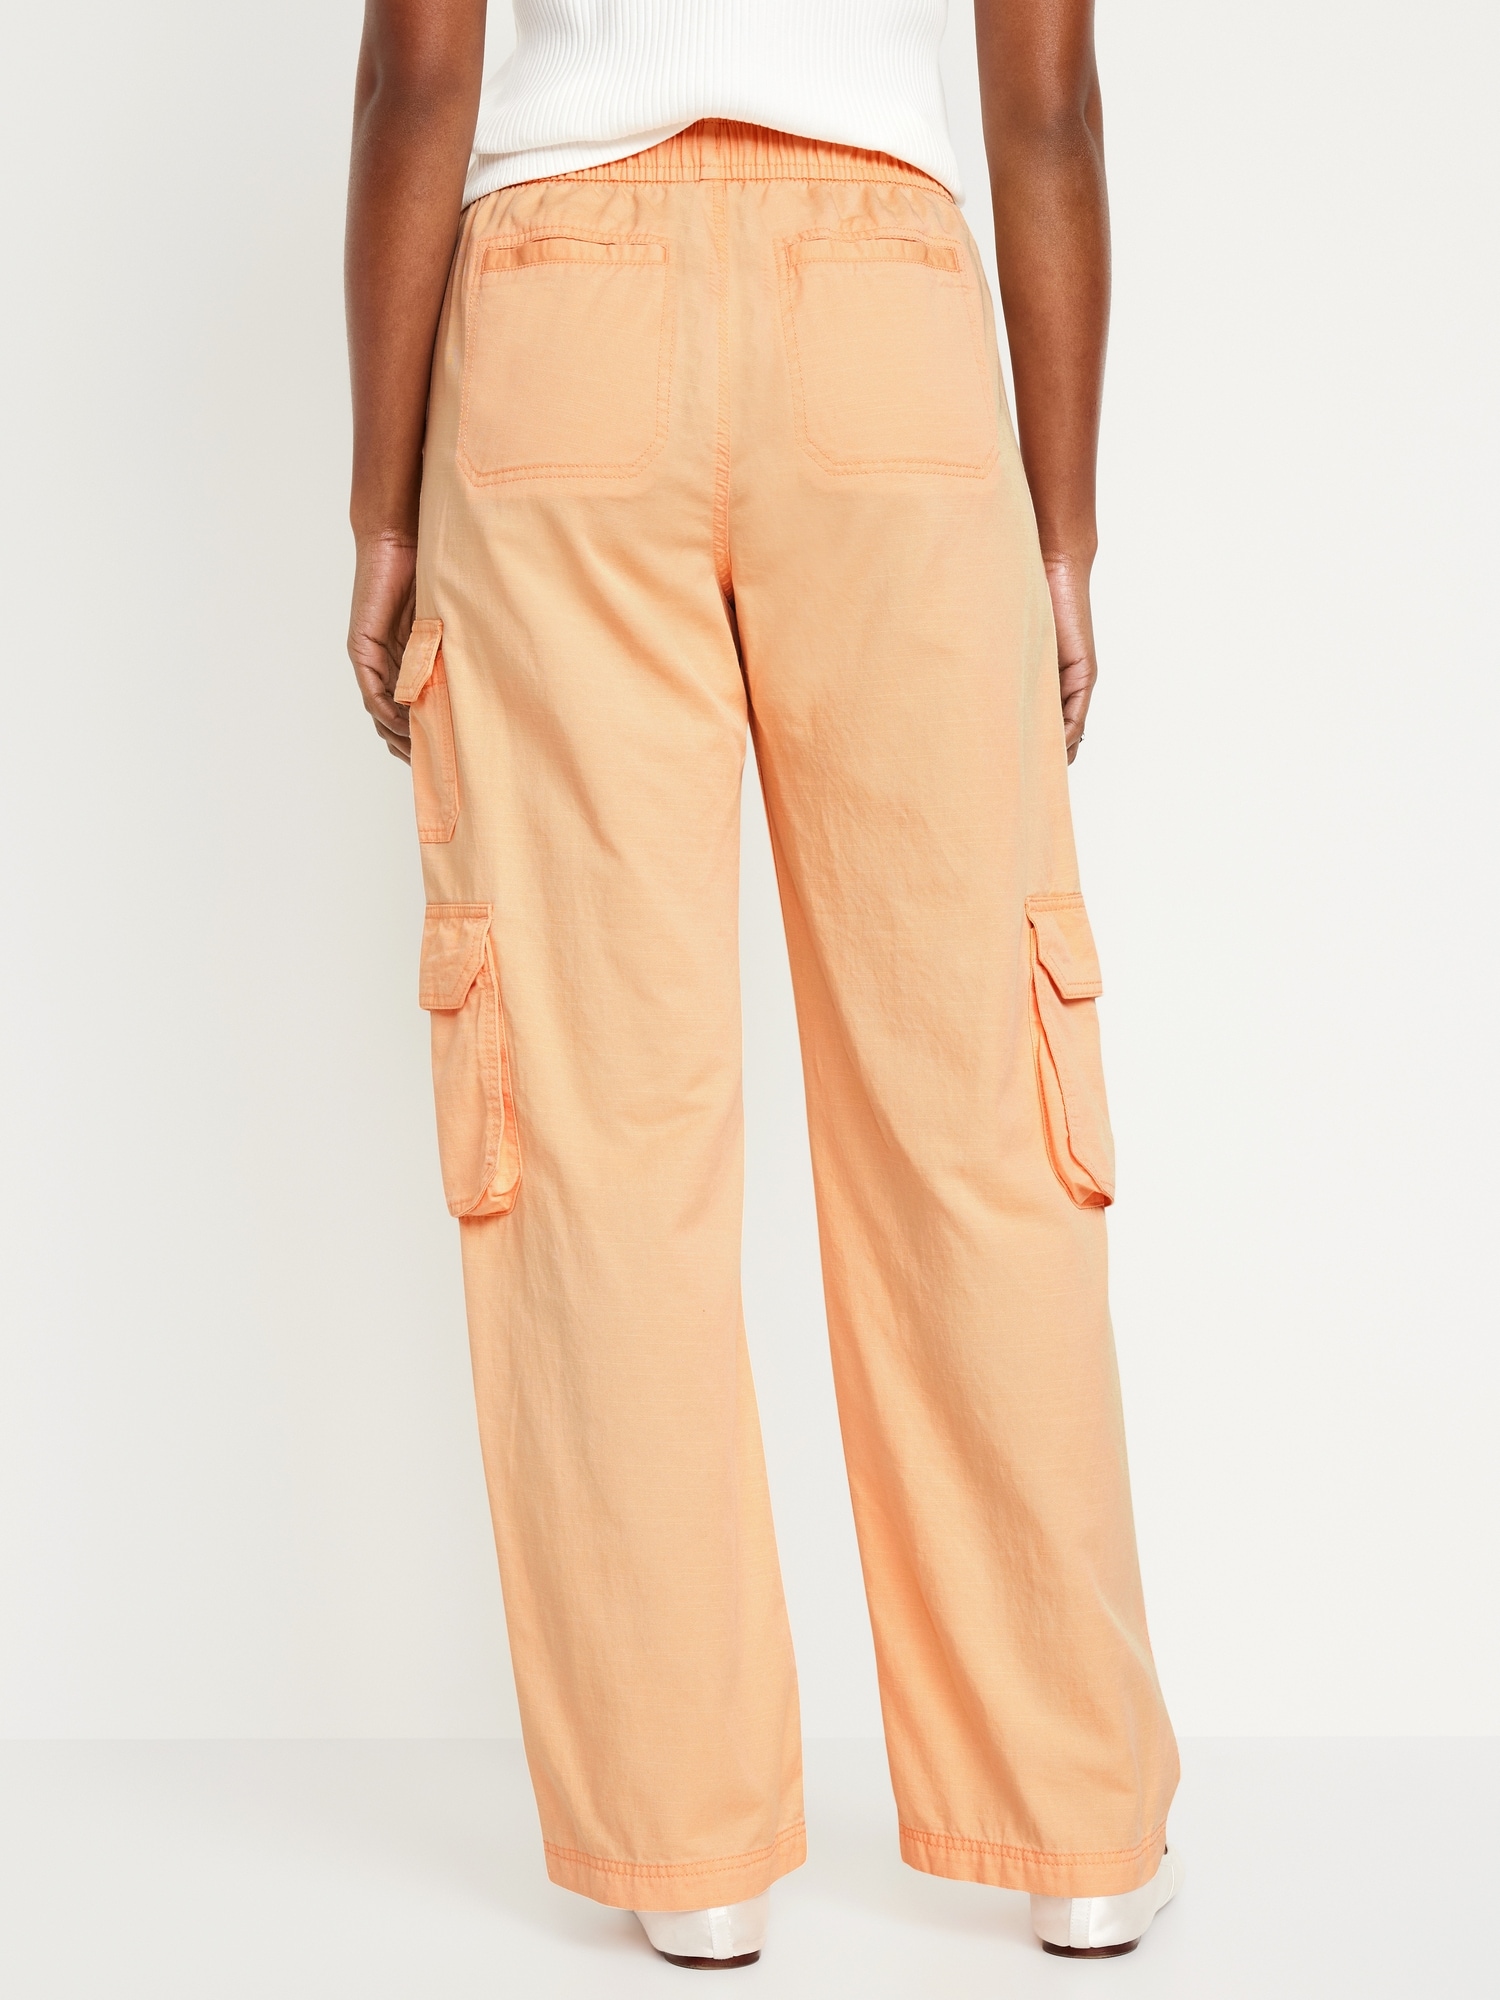 Old Navy Women's Mid-Rise Cargo Pants Orange Regular Size XL